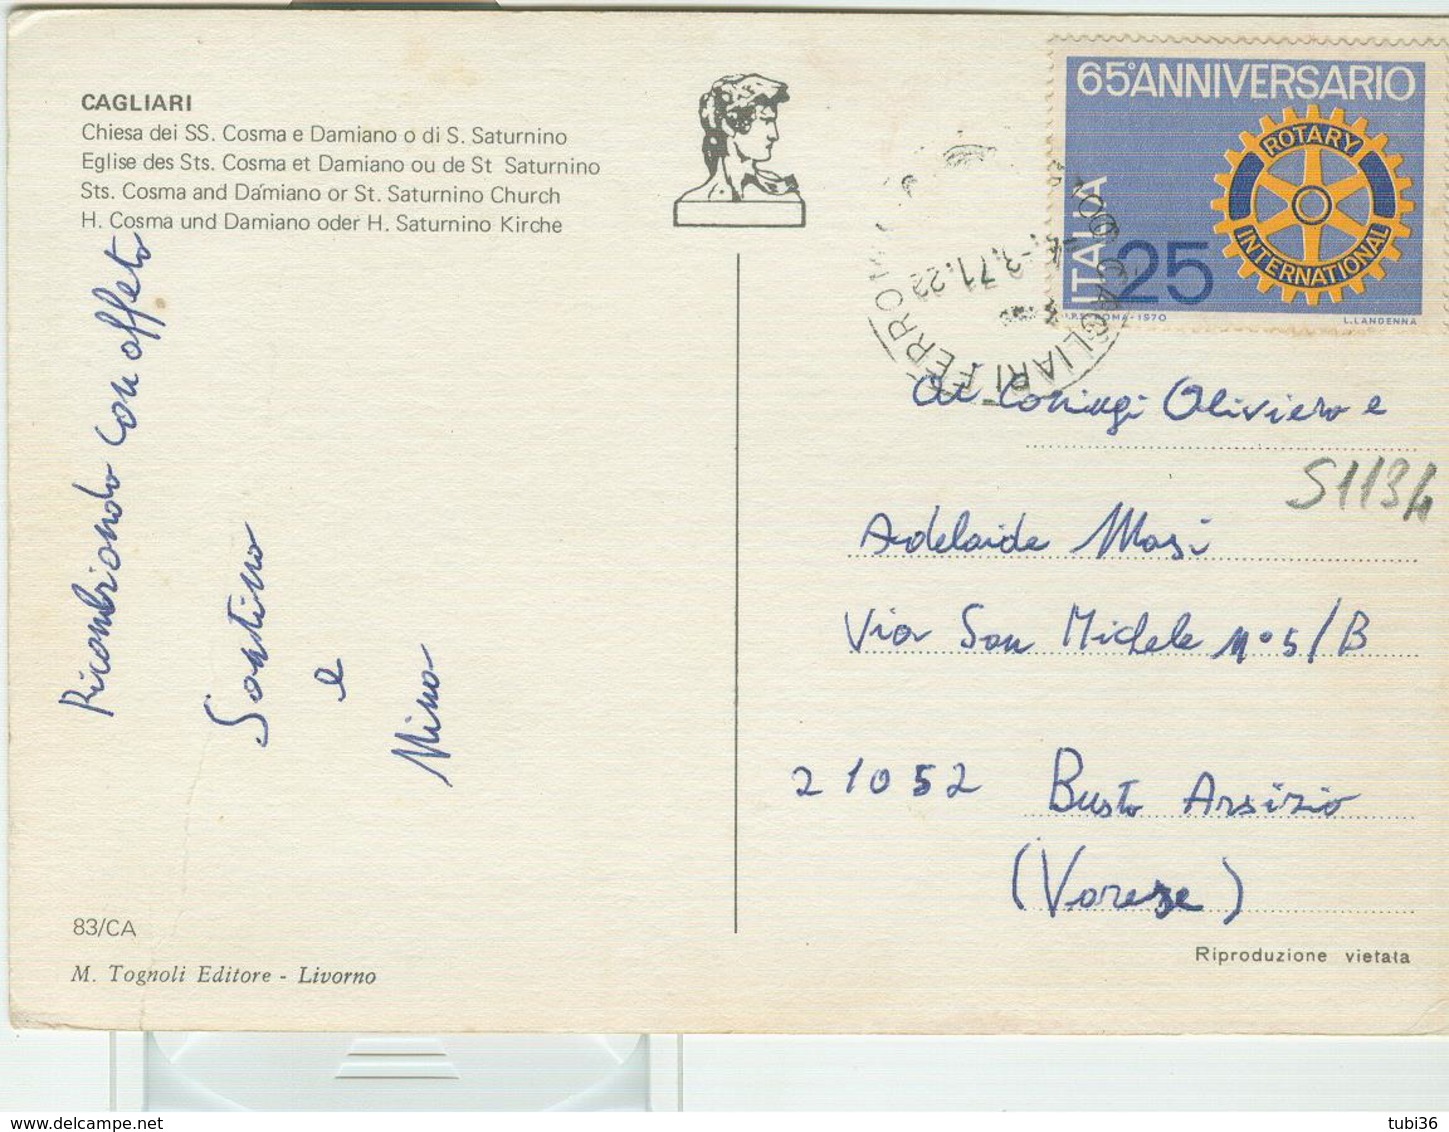 ROTARY £. 25 ,S 1134, ISOLATO TARIFFA CARTOLINA,1971,TIMBRO POSTE CAGLIARI,CHIESA SS.COSMA E DAMIANO-S.SATURNINO X BUSTO - 1971-80: Storia Postale